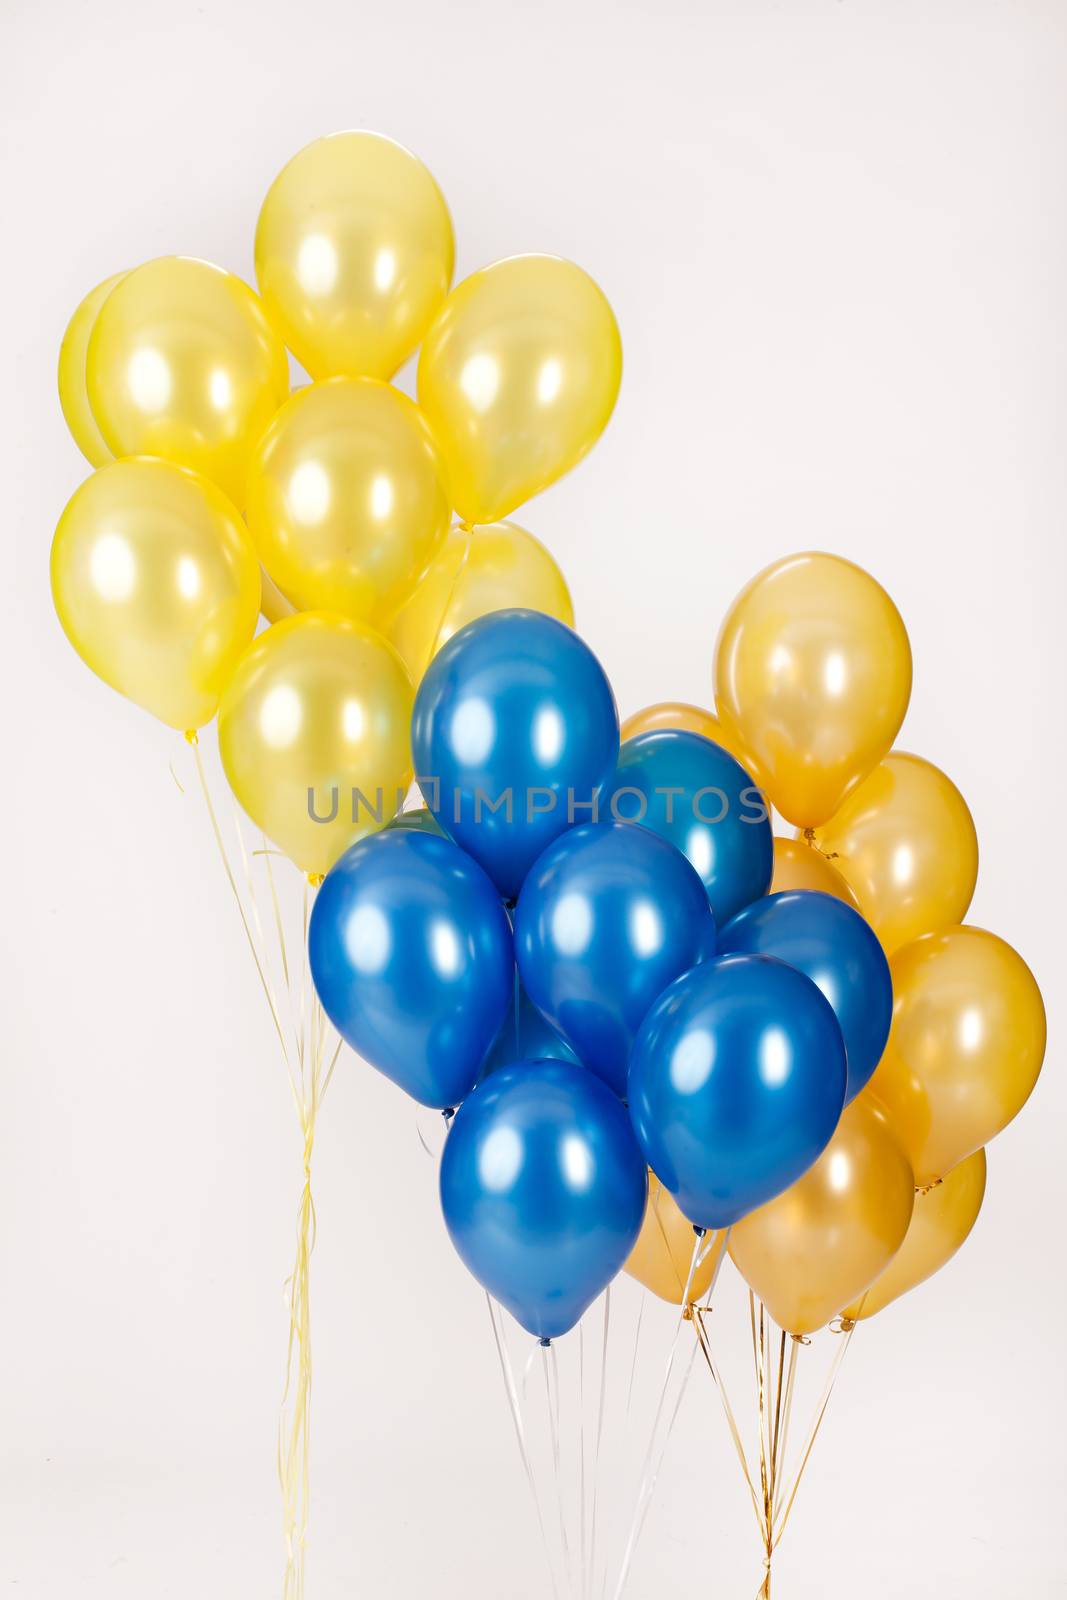 Colour Balloons by Fotoskat